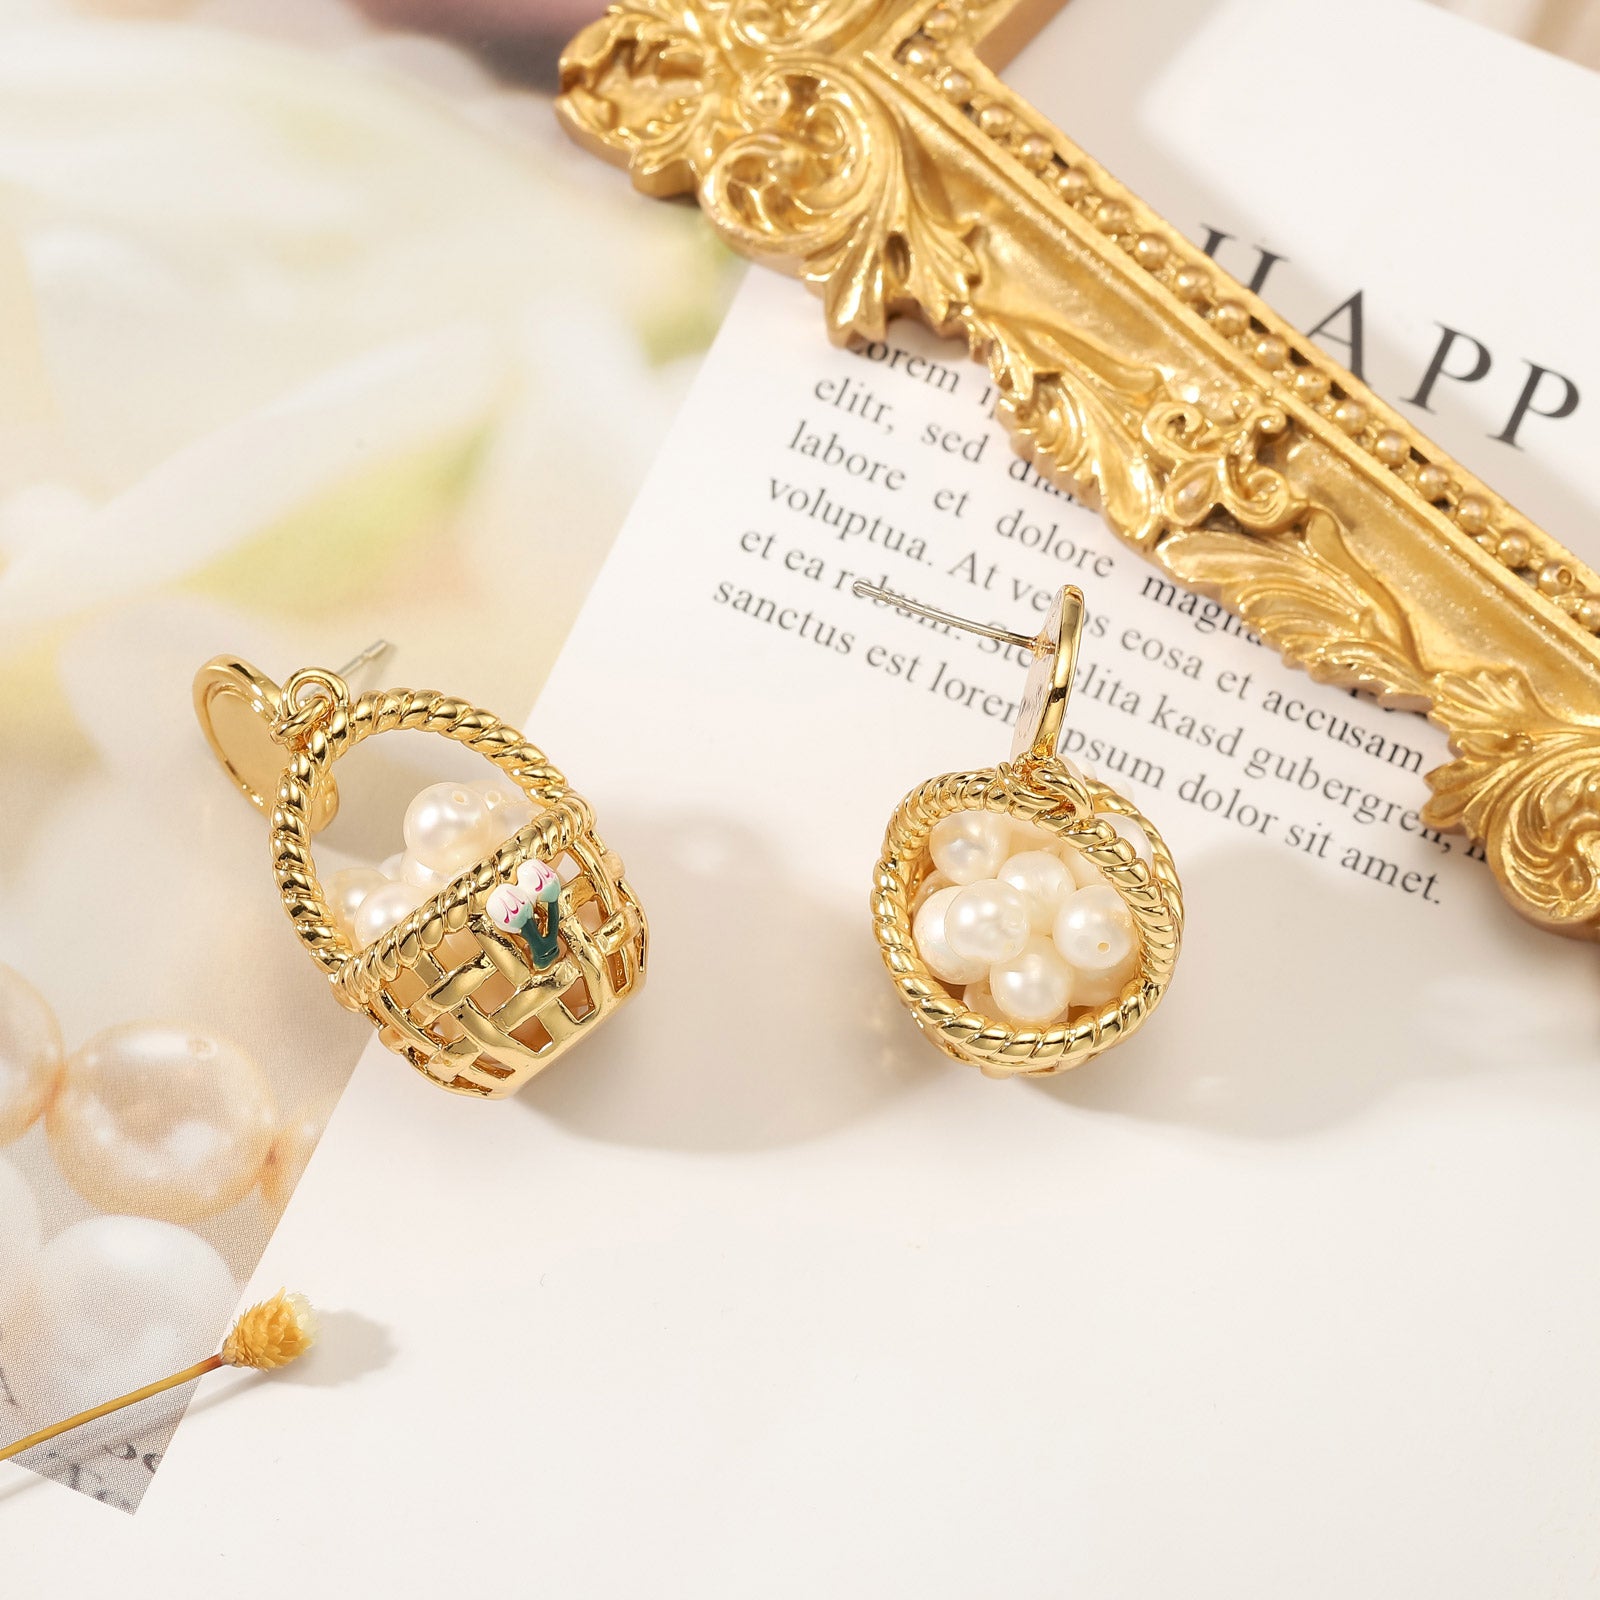 Baskets of Freshwater Pearls Earrings